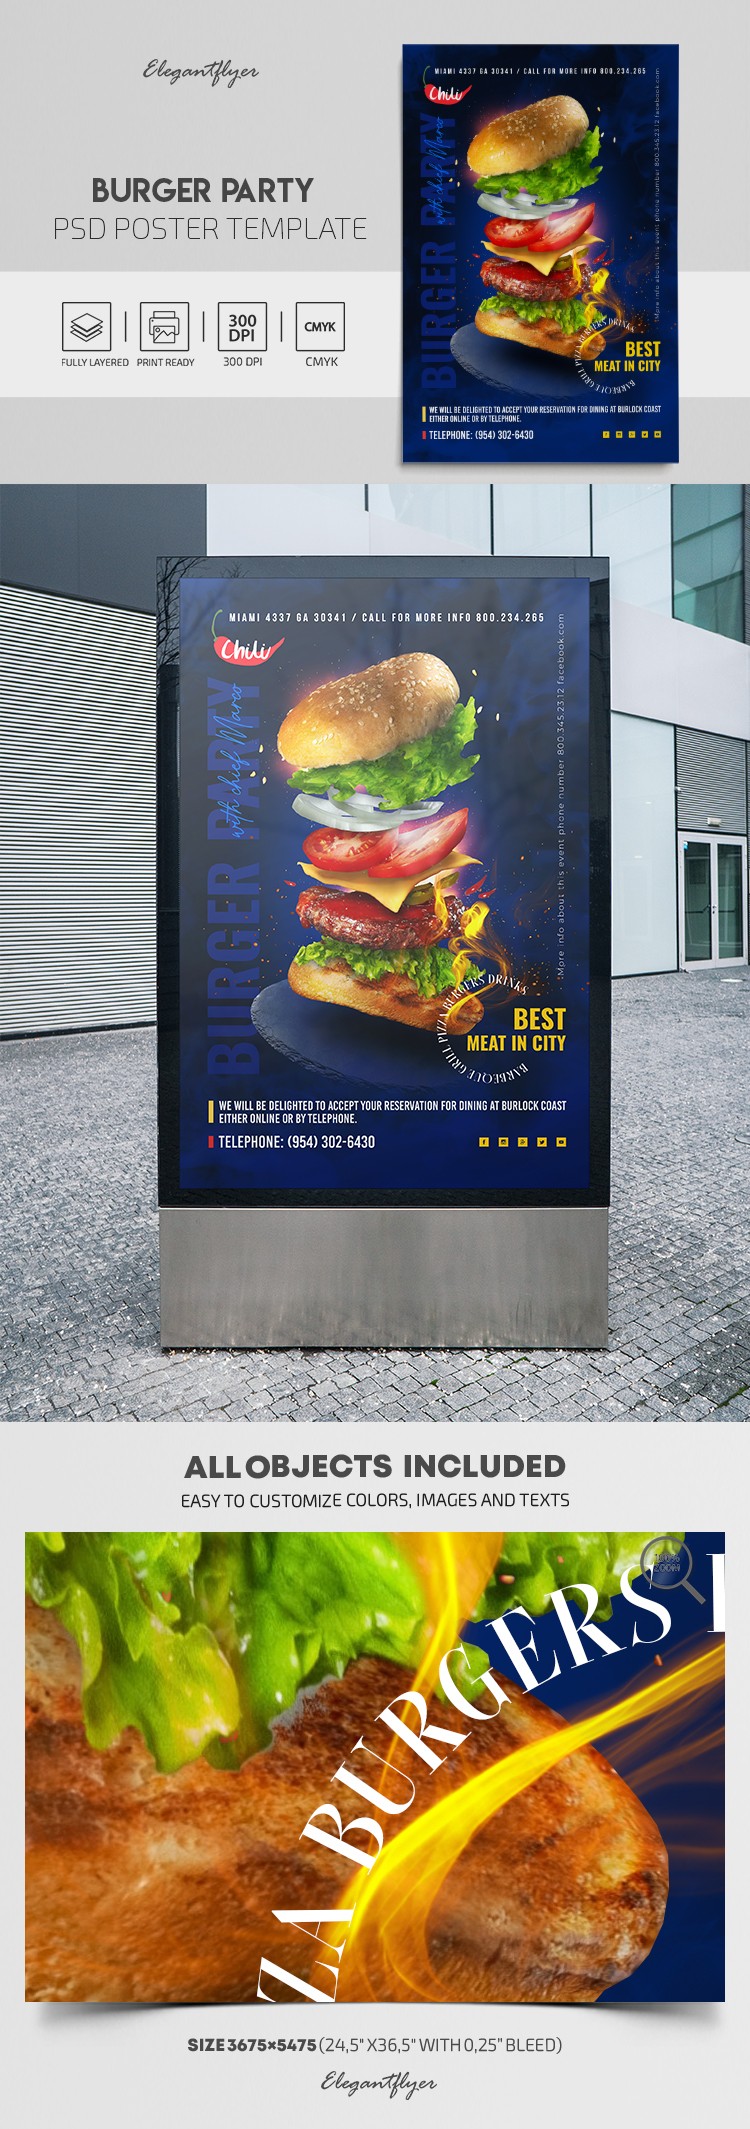 Burger Party Poster by ElegantFlyer